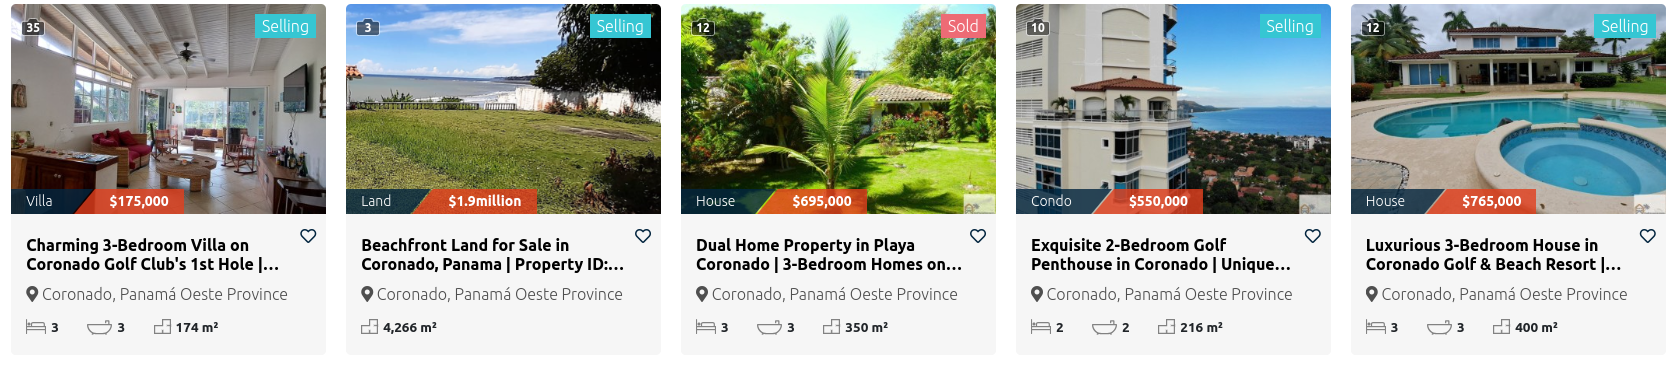 Do Panama Coronado Real Estate Listings